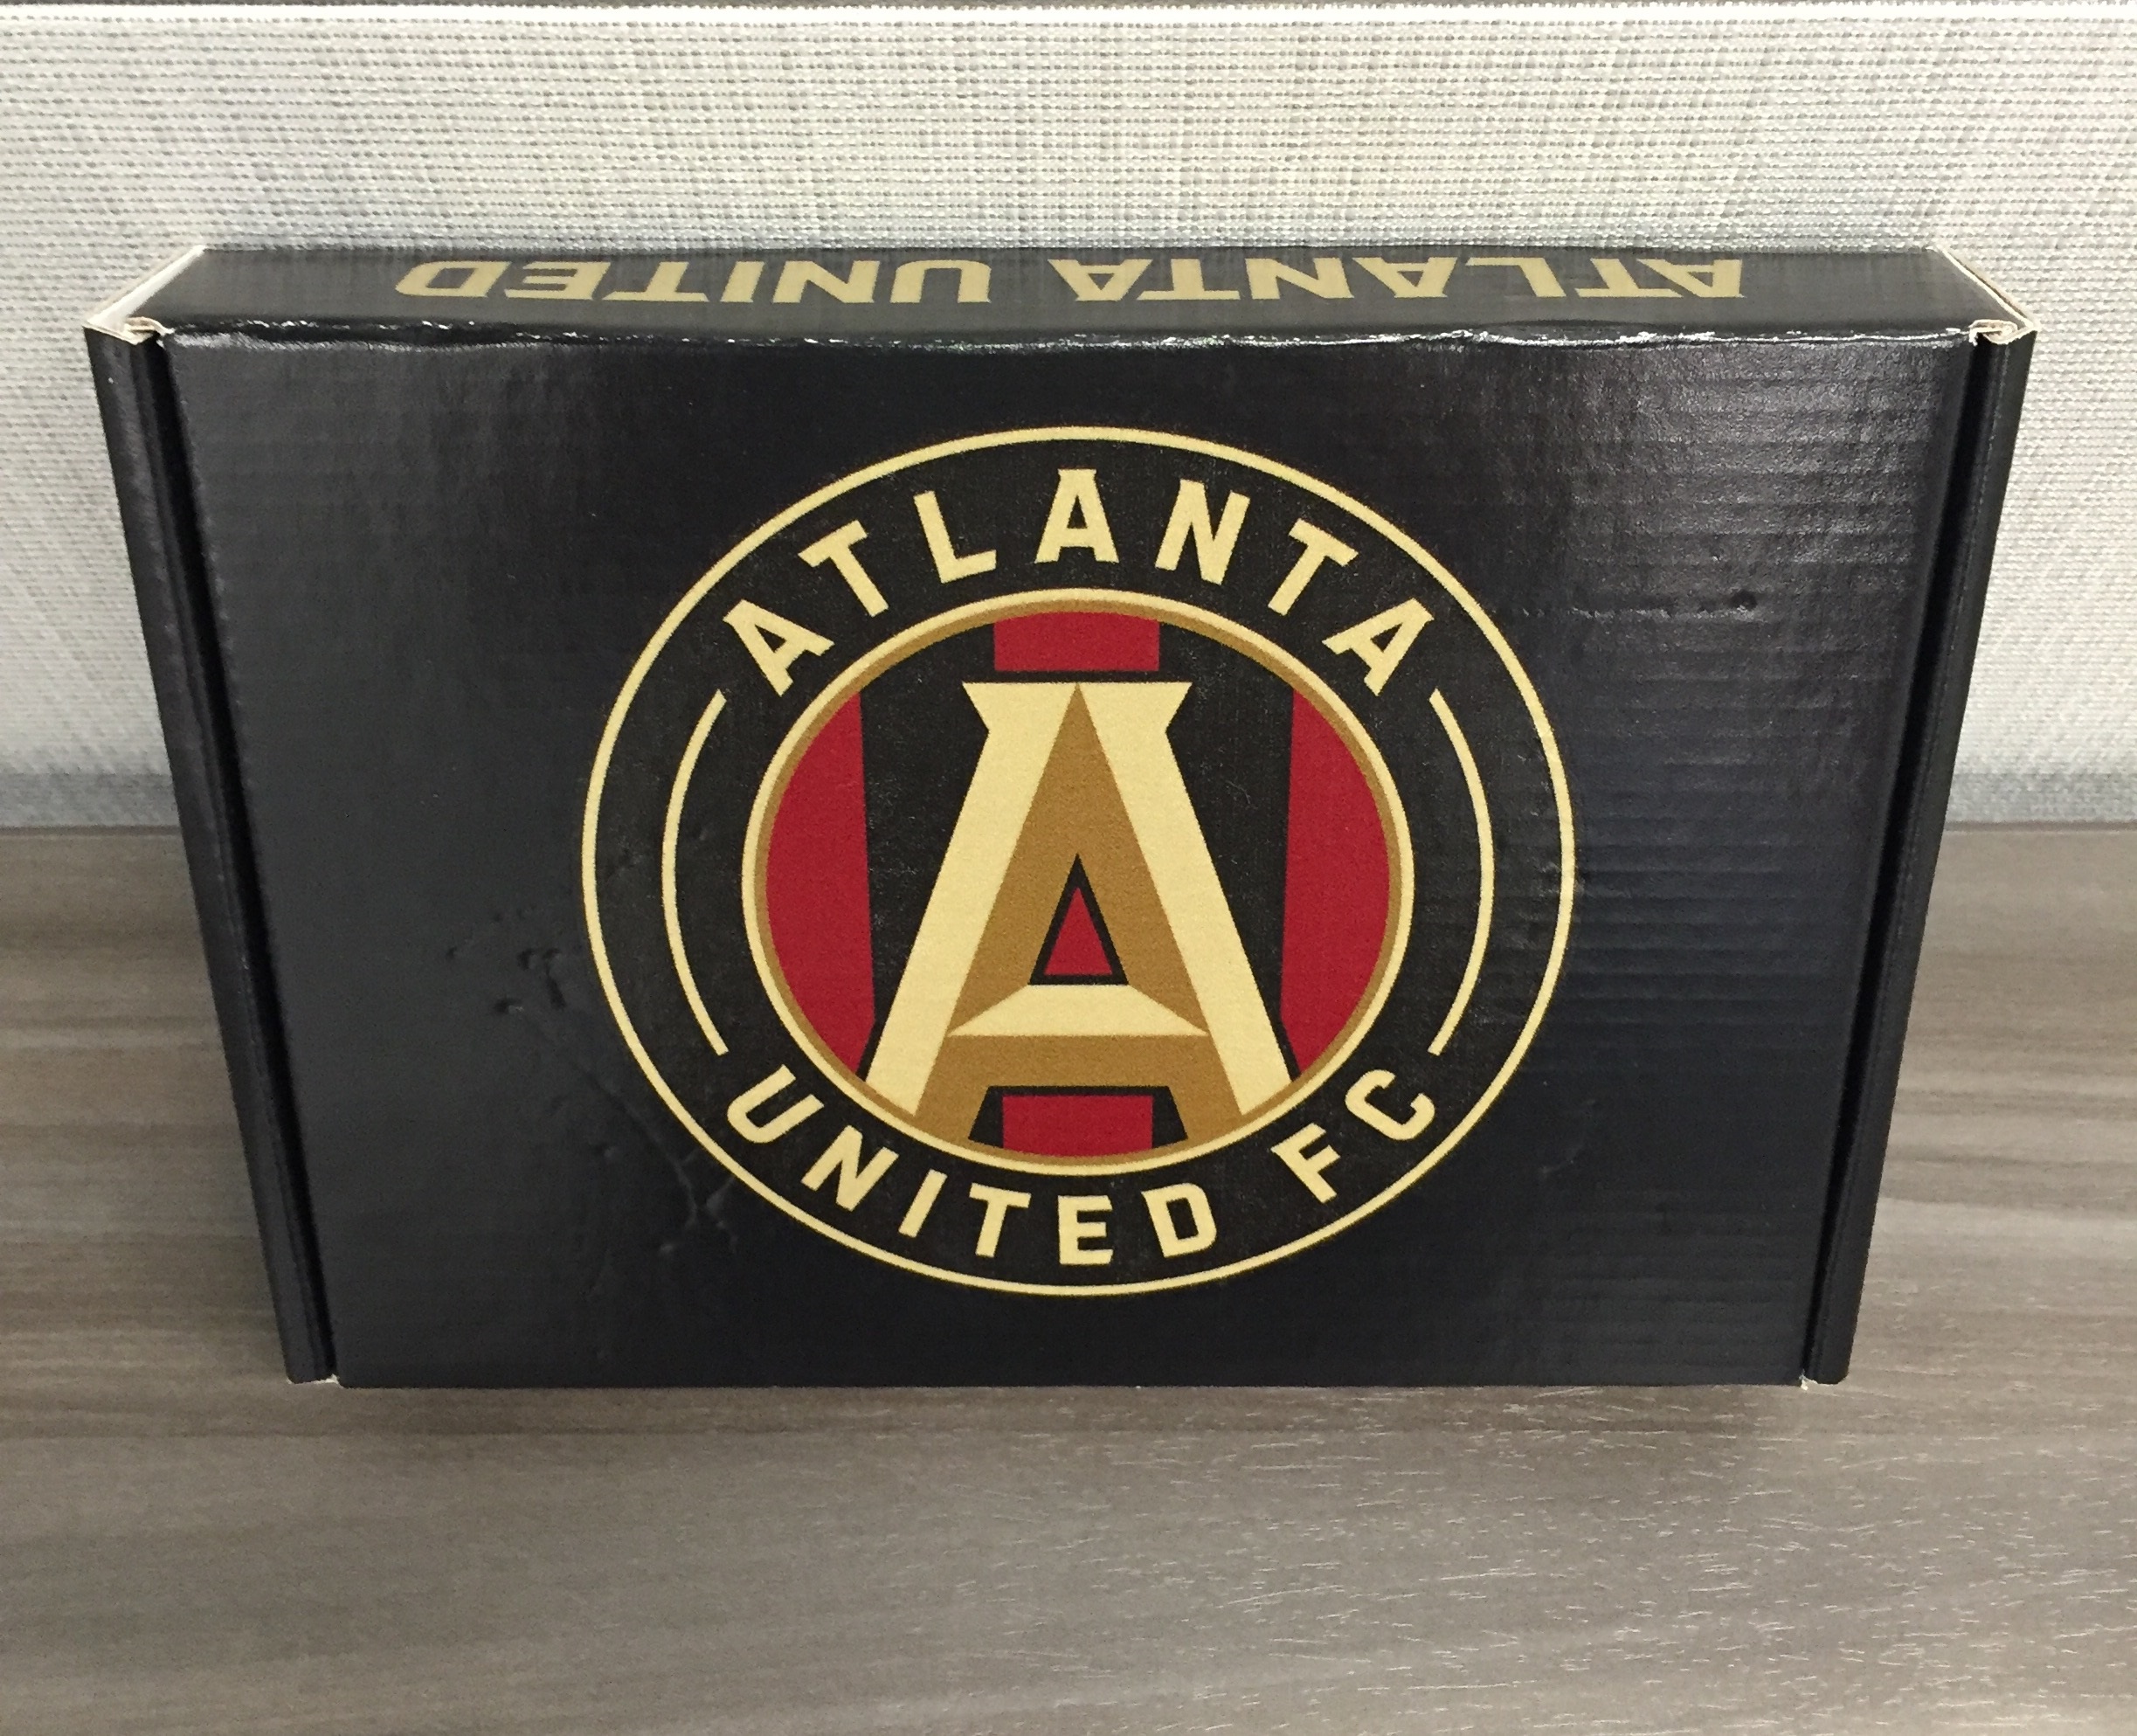 Atlanta Falcons & Atlanta United Team Store - Atlantic Station